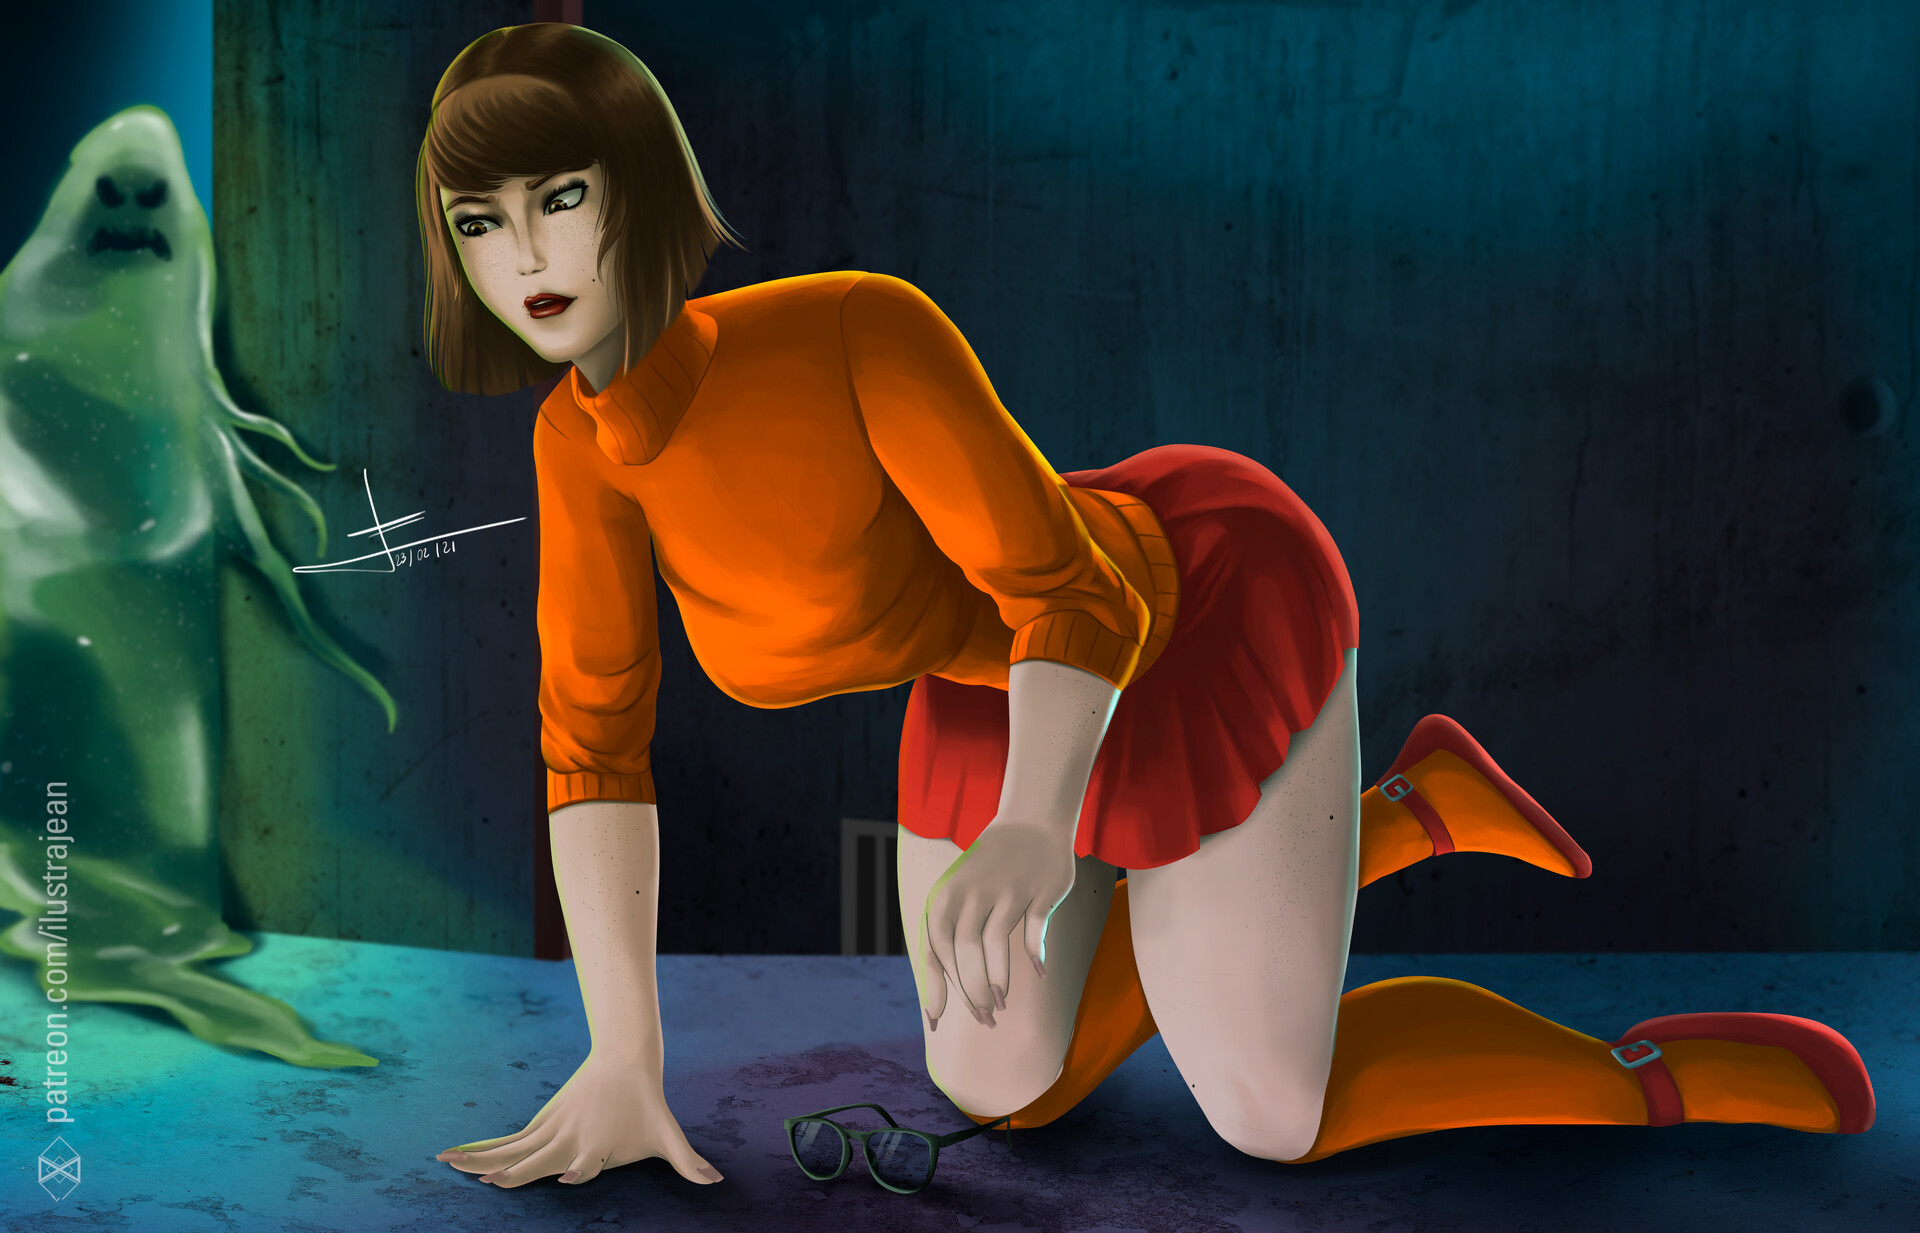 Velma in her casual suit.